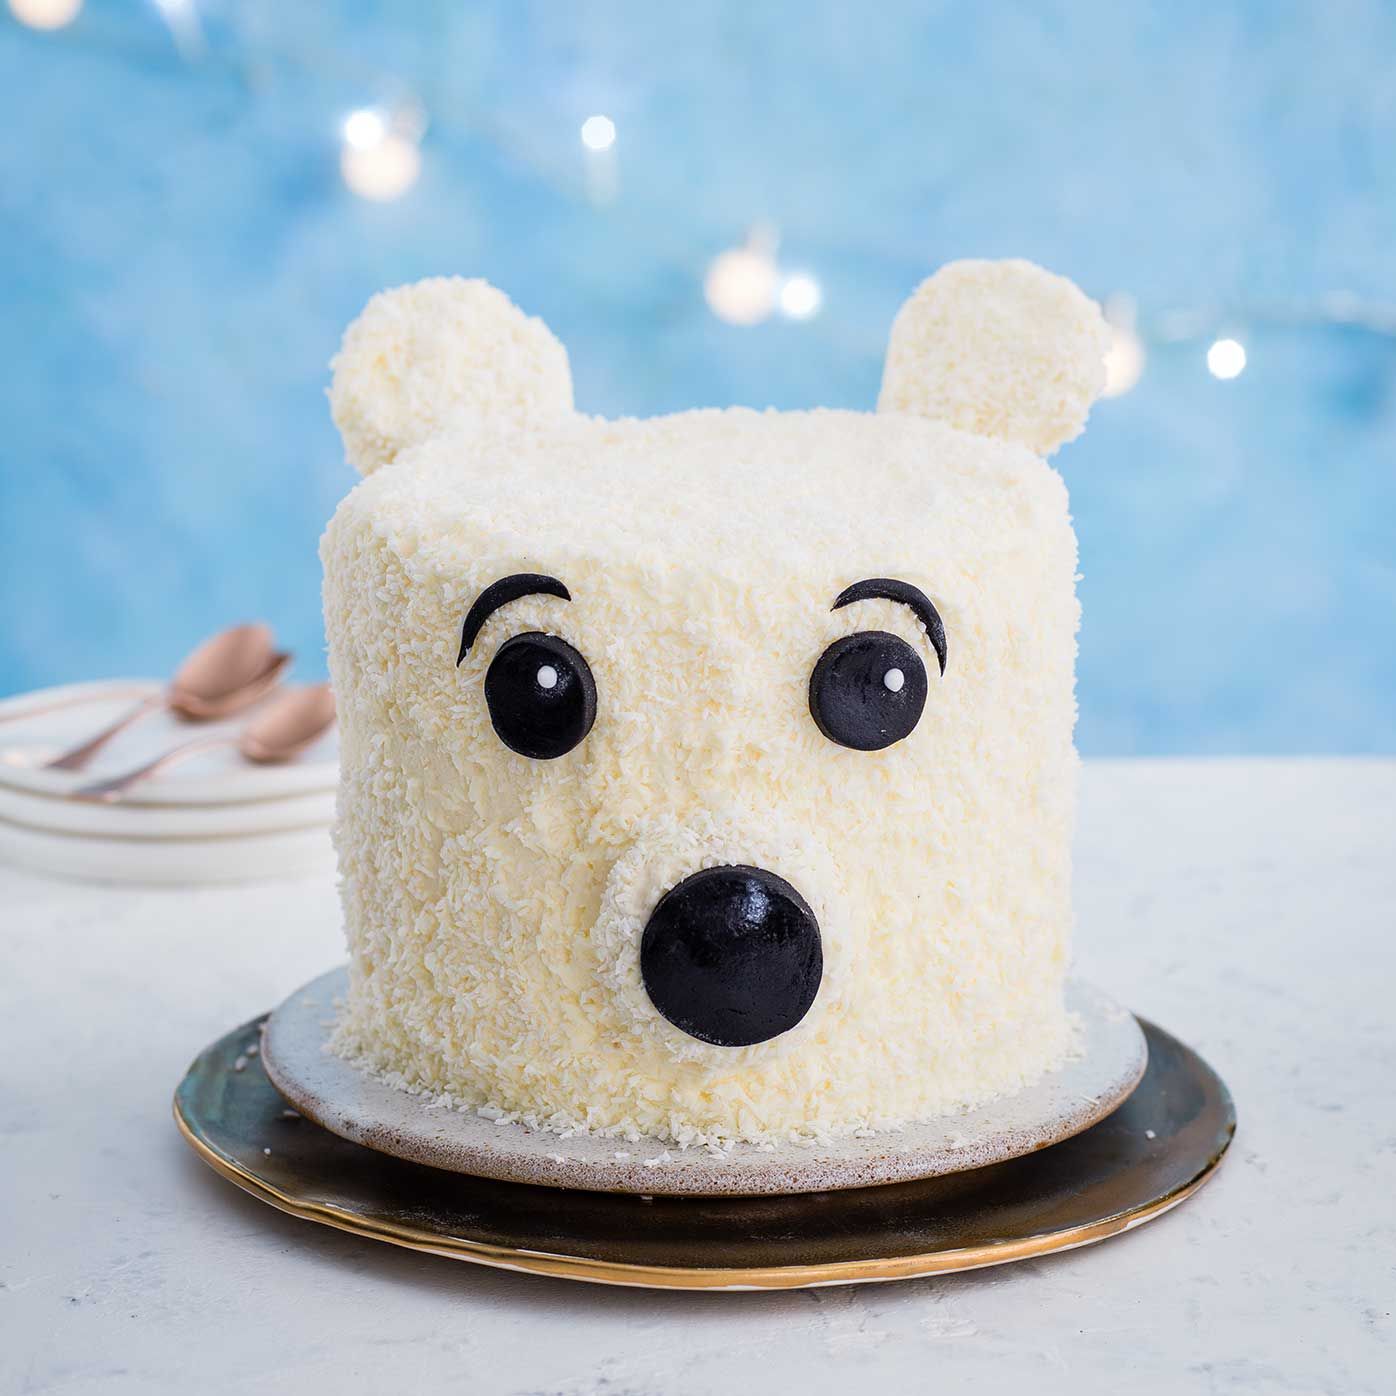 Teddy Bear Cake Tutorial - YouTube